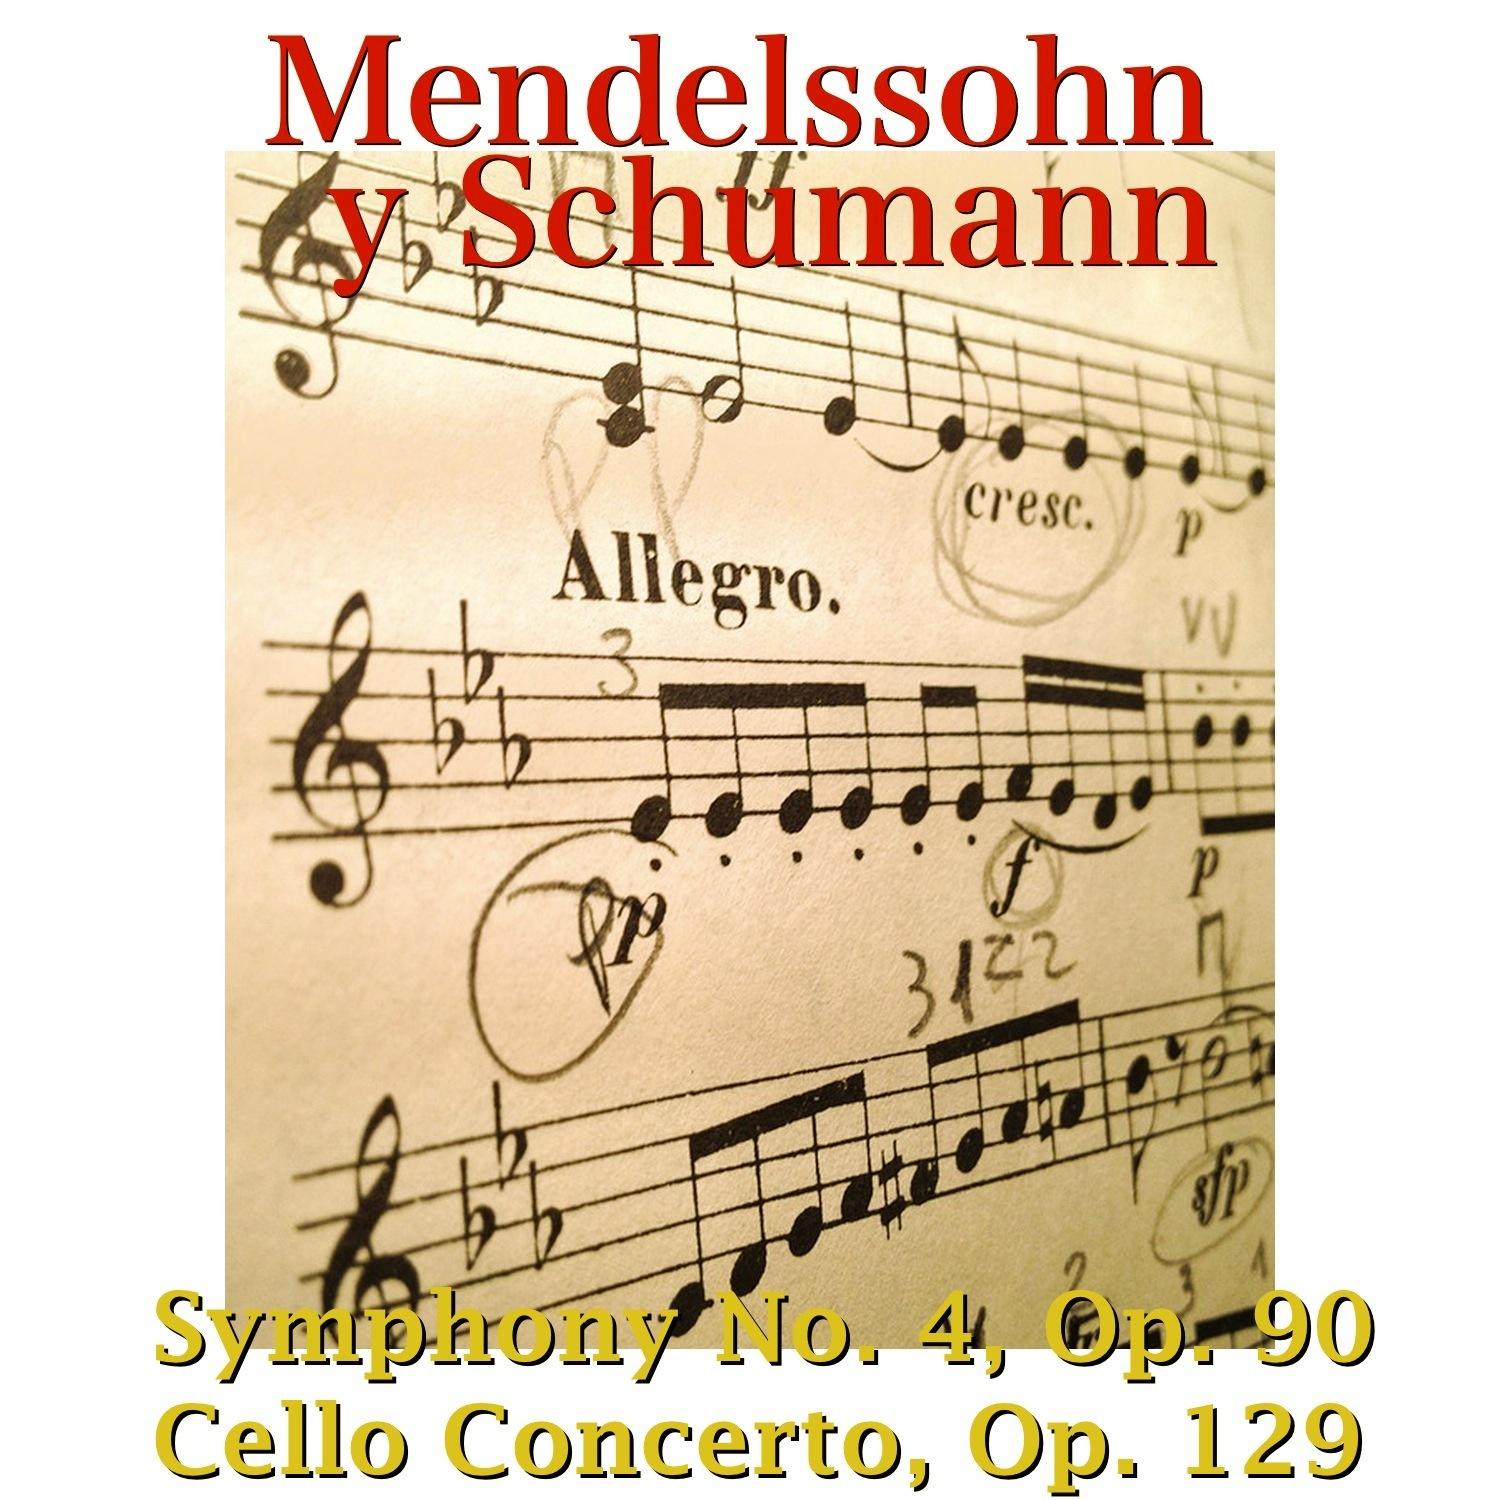 Mendelssohn y Schumann: Symphony No. 4, Op. 90, Cello Concerto, Op. 129